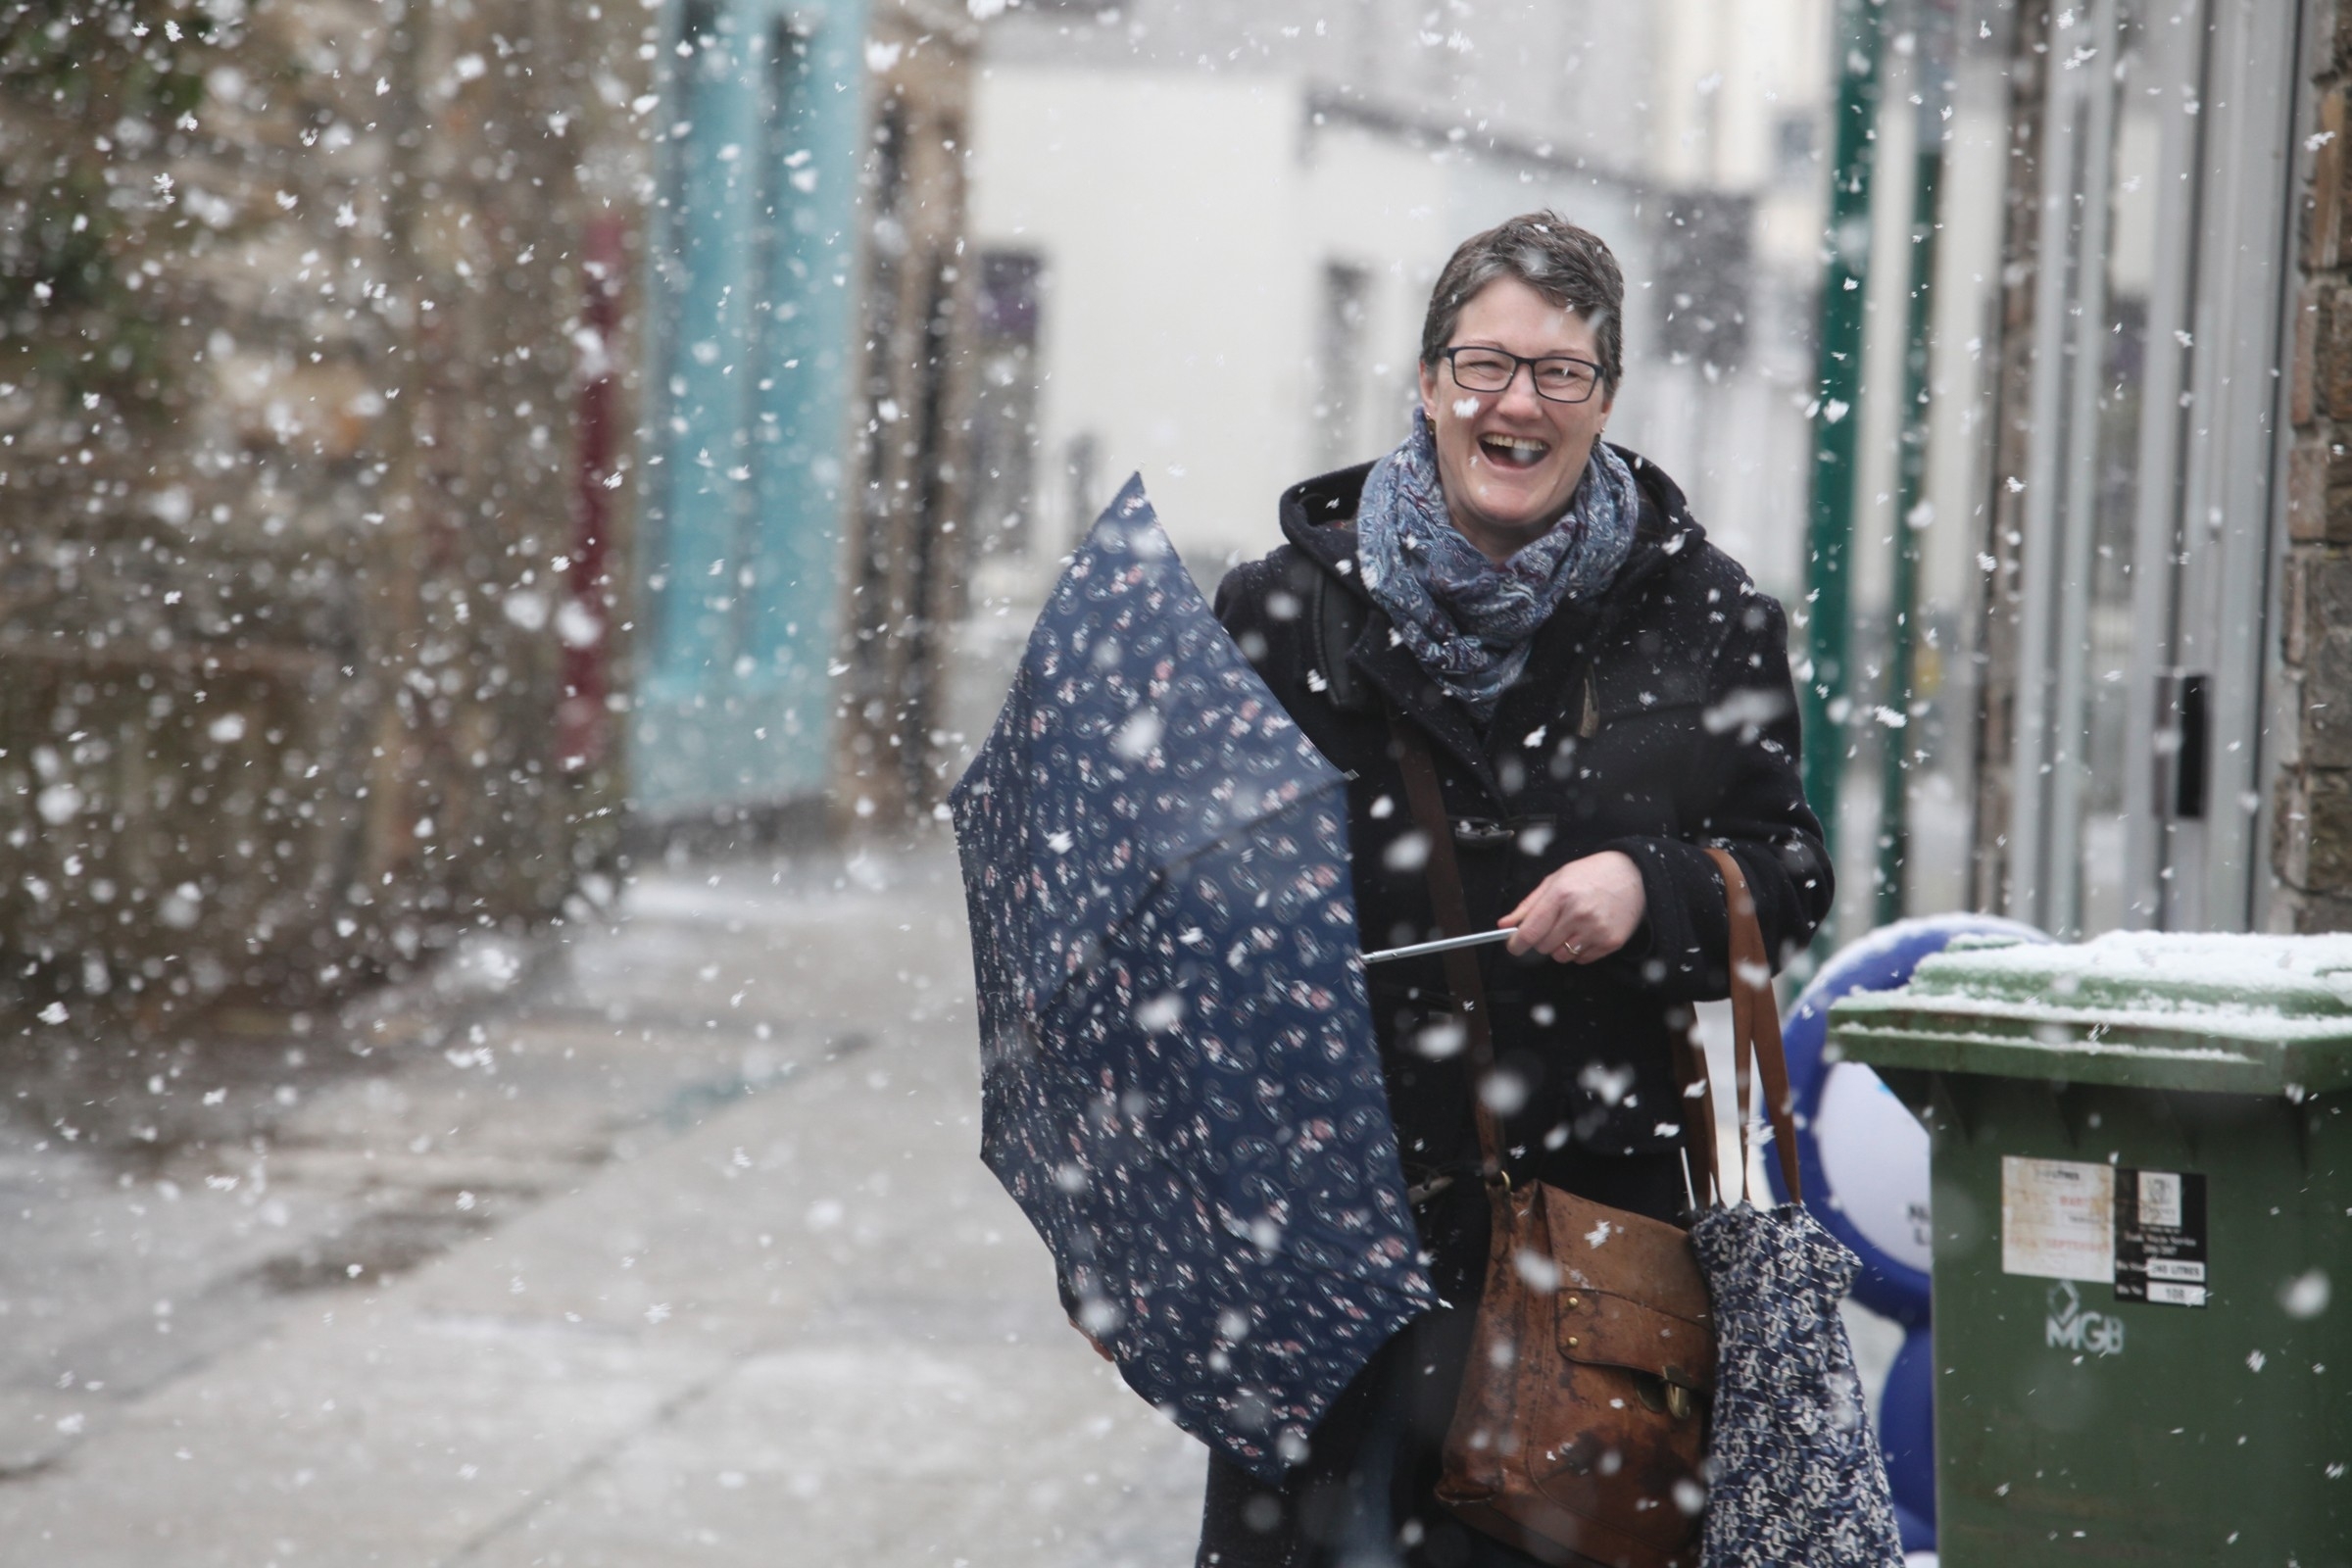 A Kirkwall shopper enjoying the spring snow this morning.